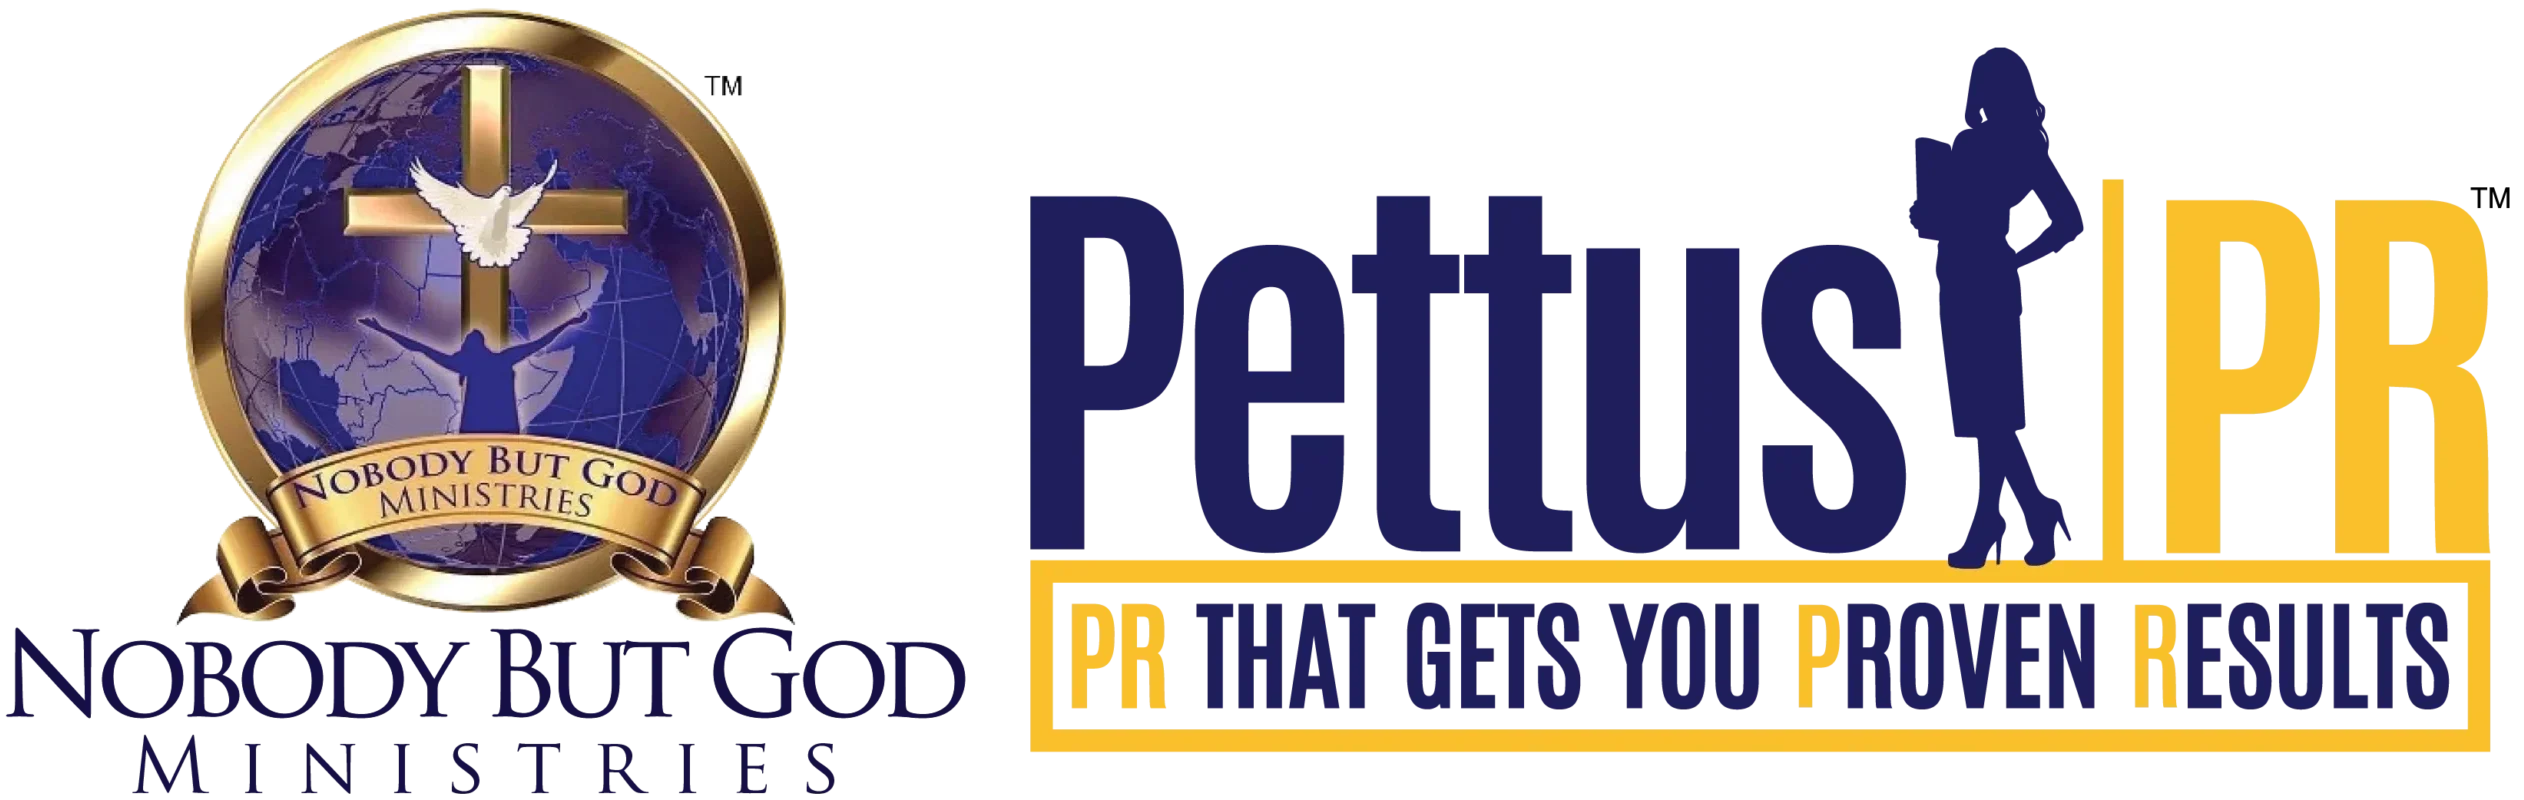 ppr_Combine LOGOS -NBGM and Pettus PR